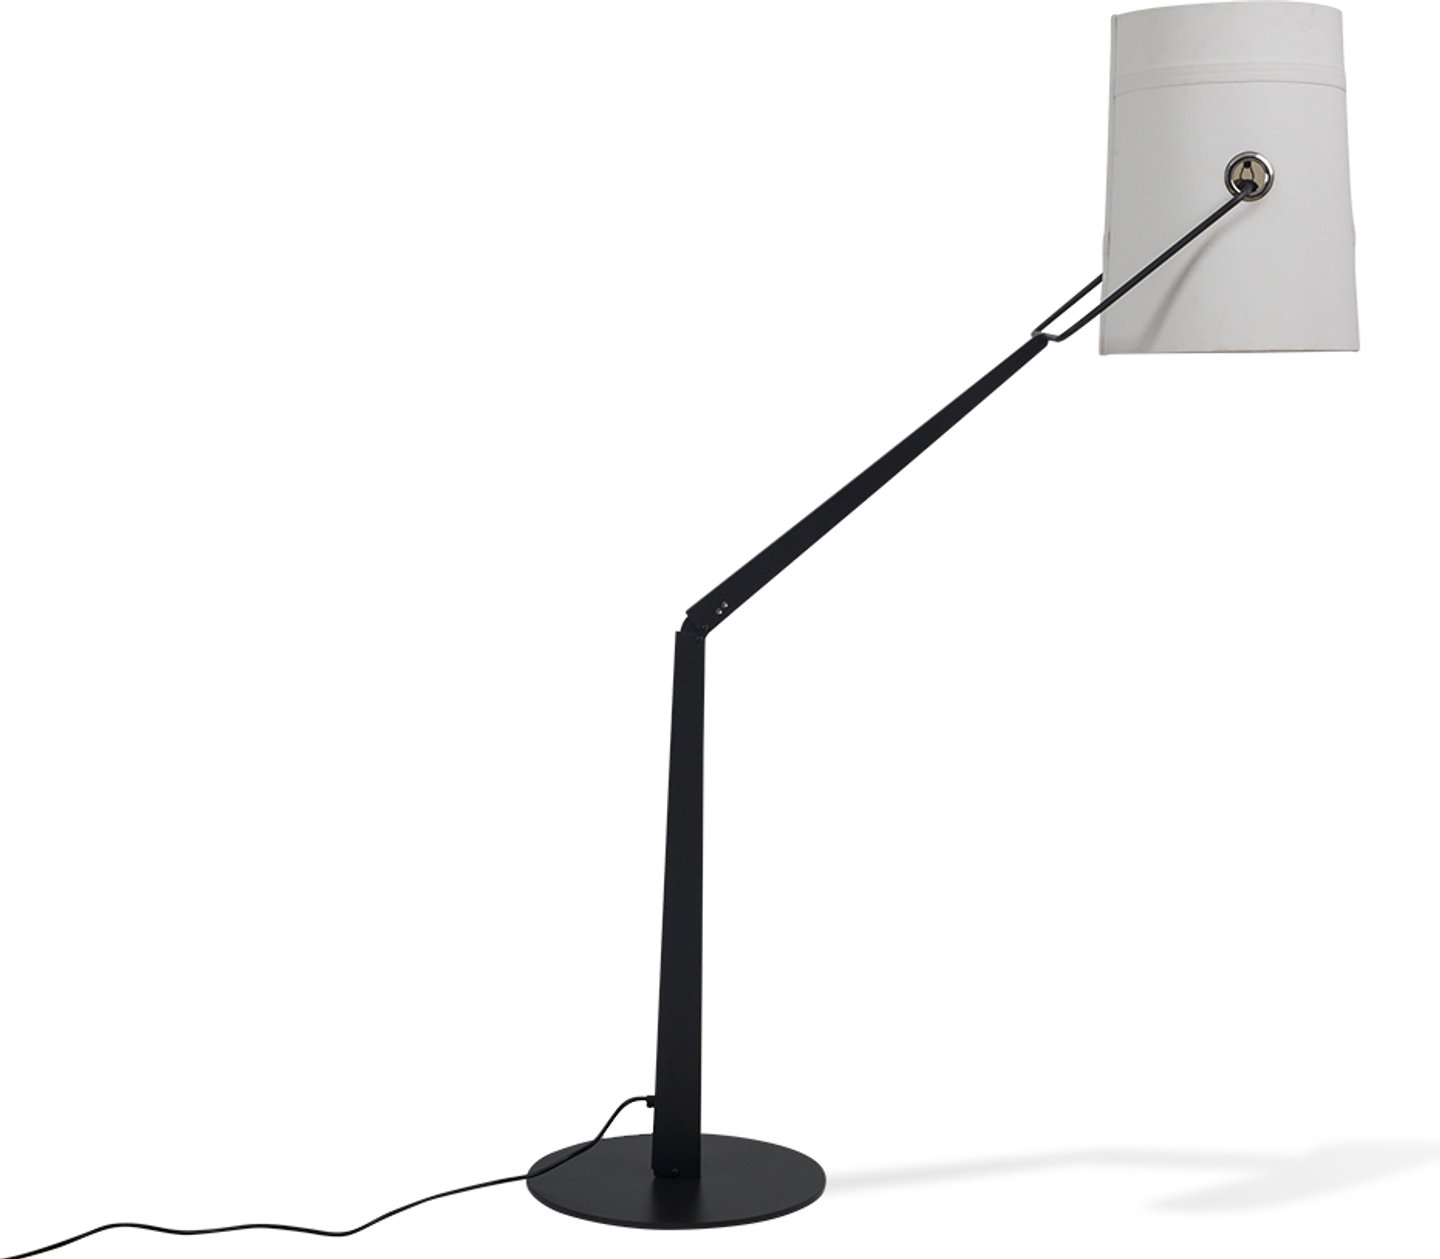 Foscarini Diesel Inspired Fork Style Floor Lamp Black image.